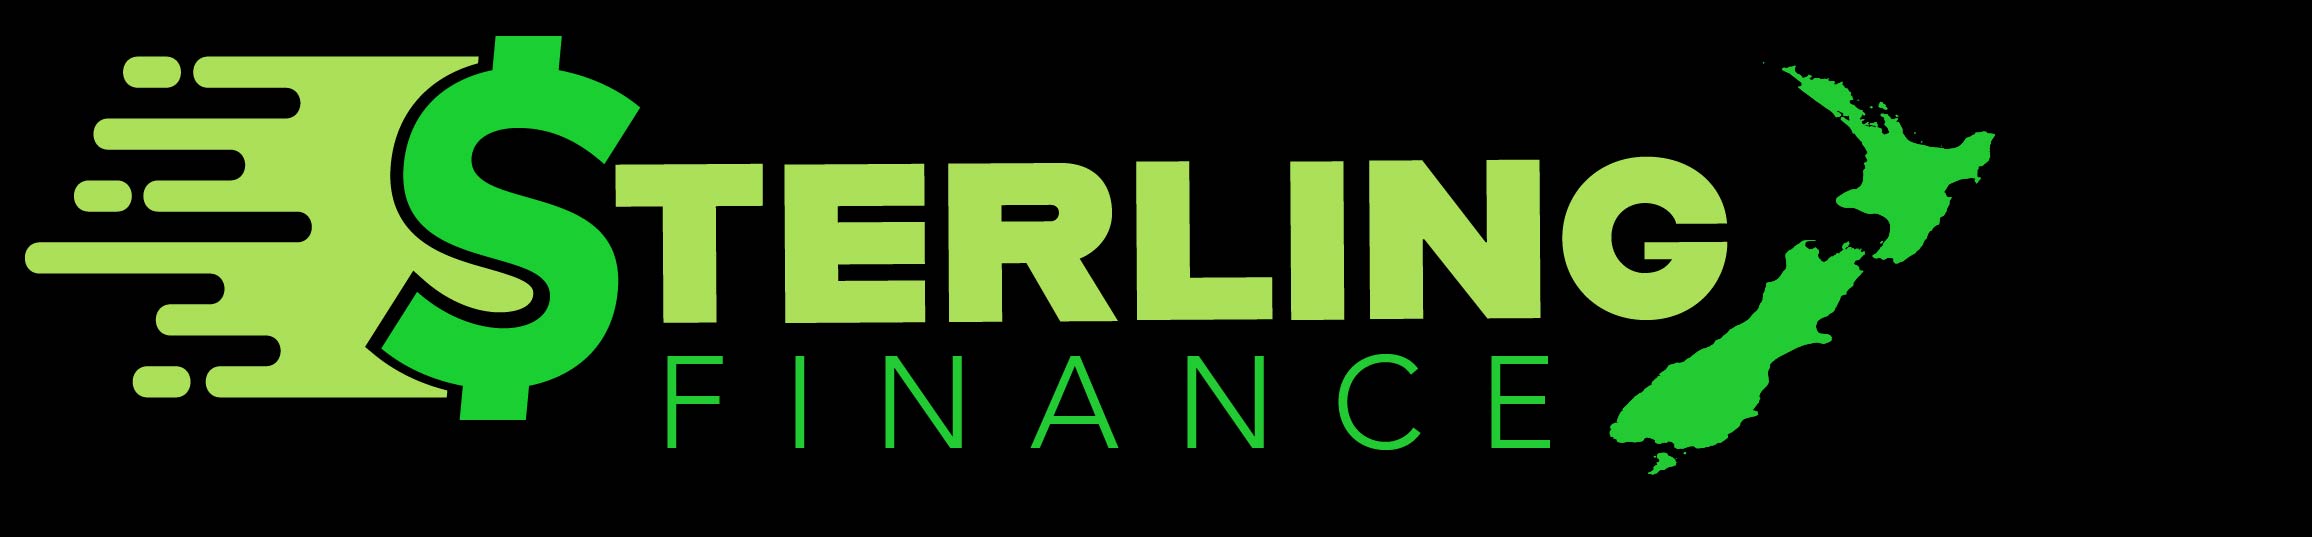 strerling finance